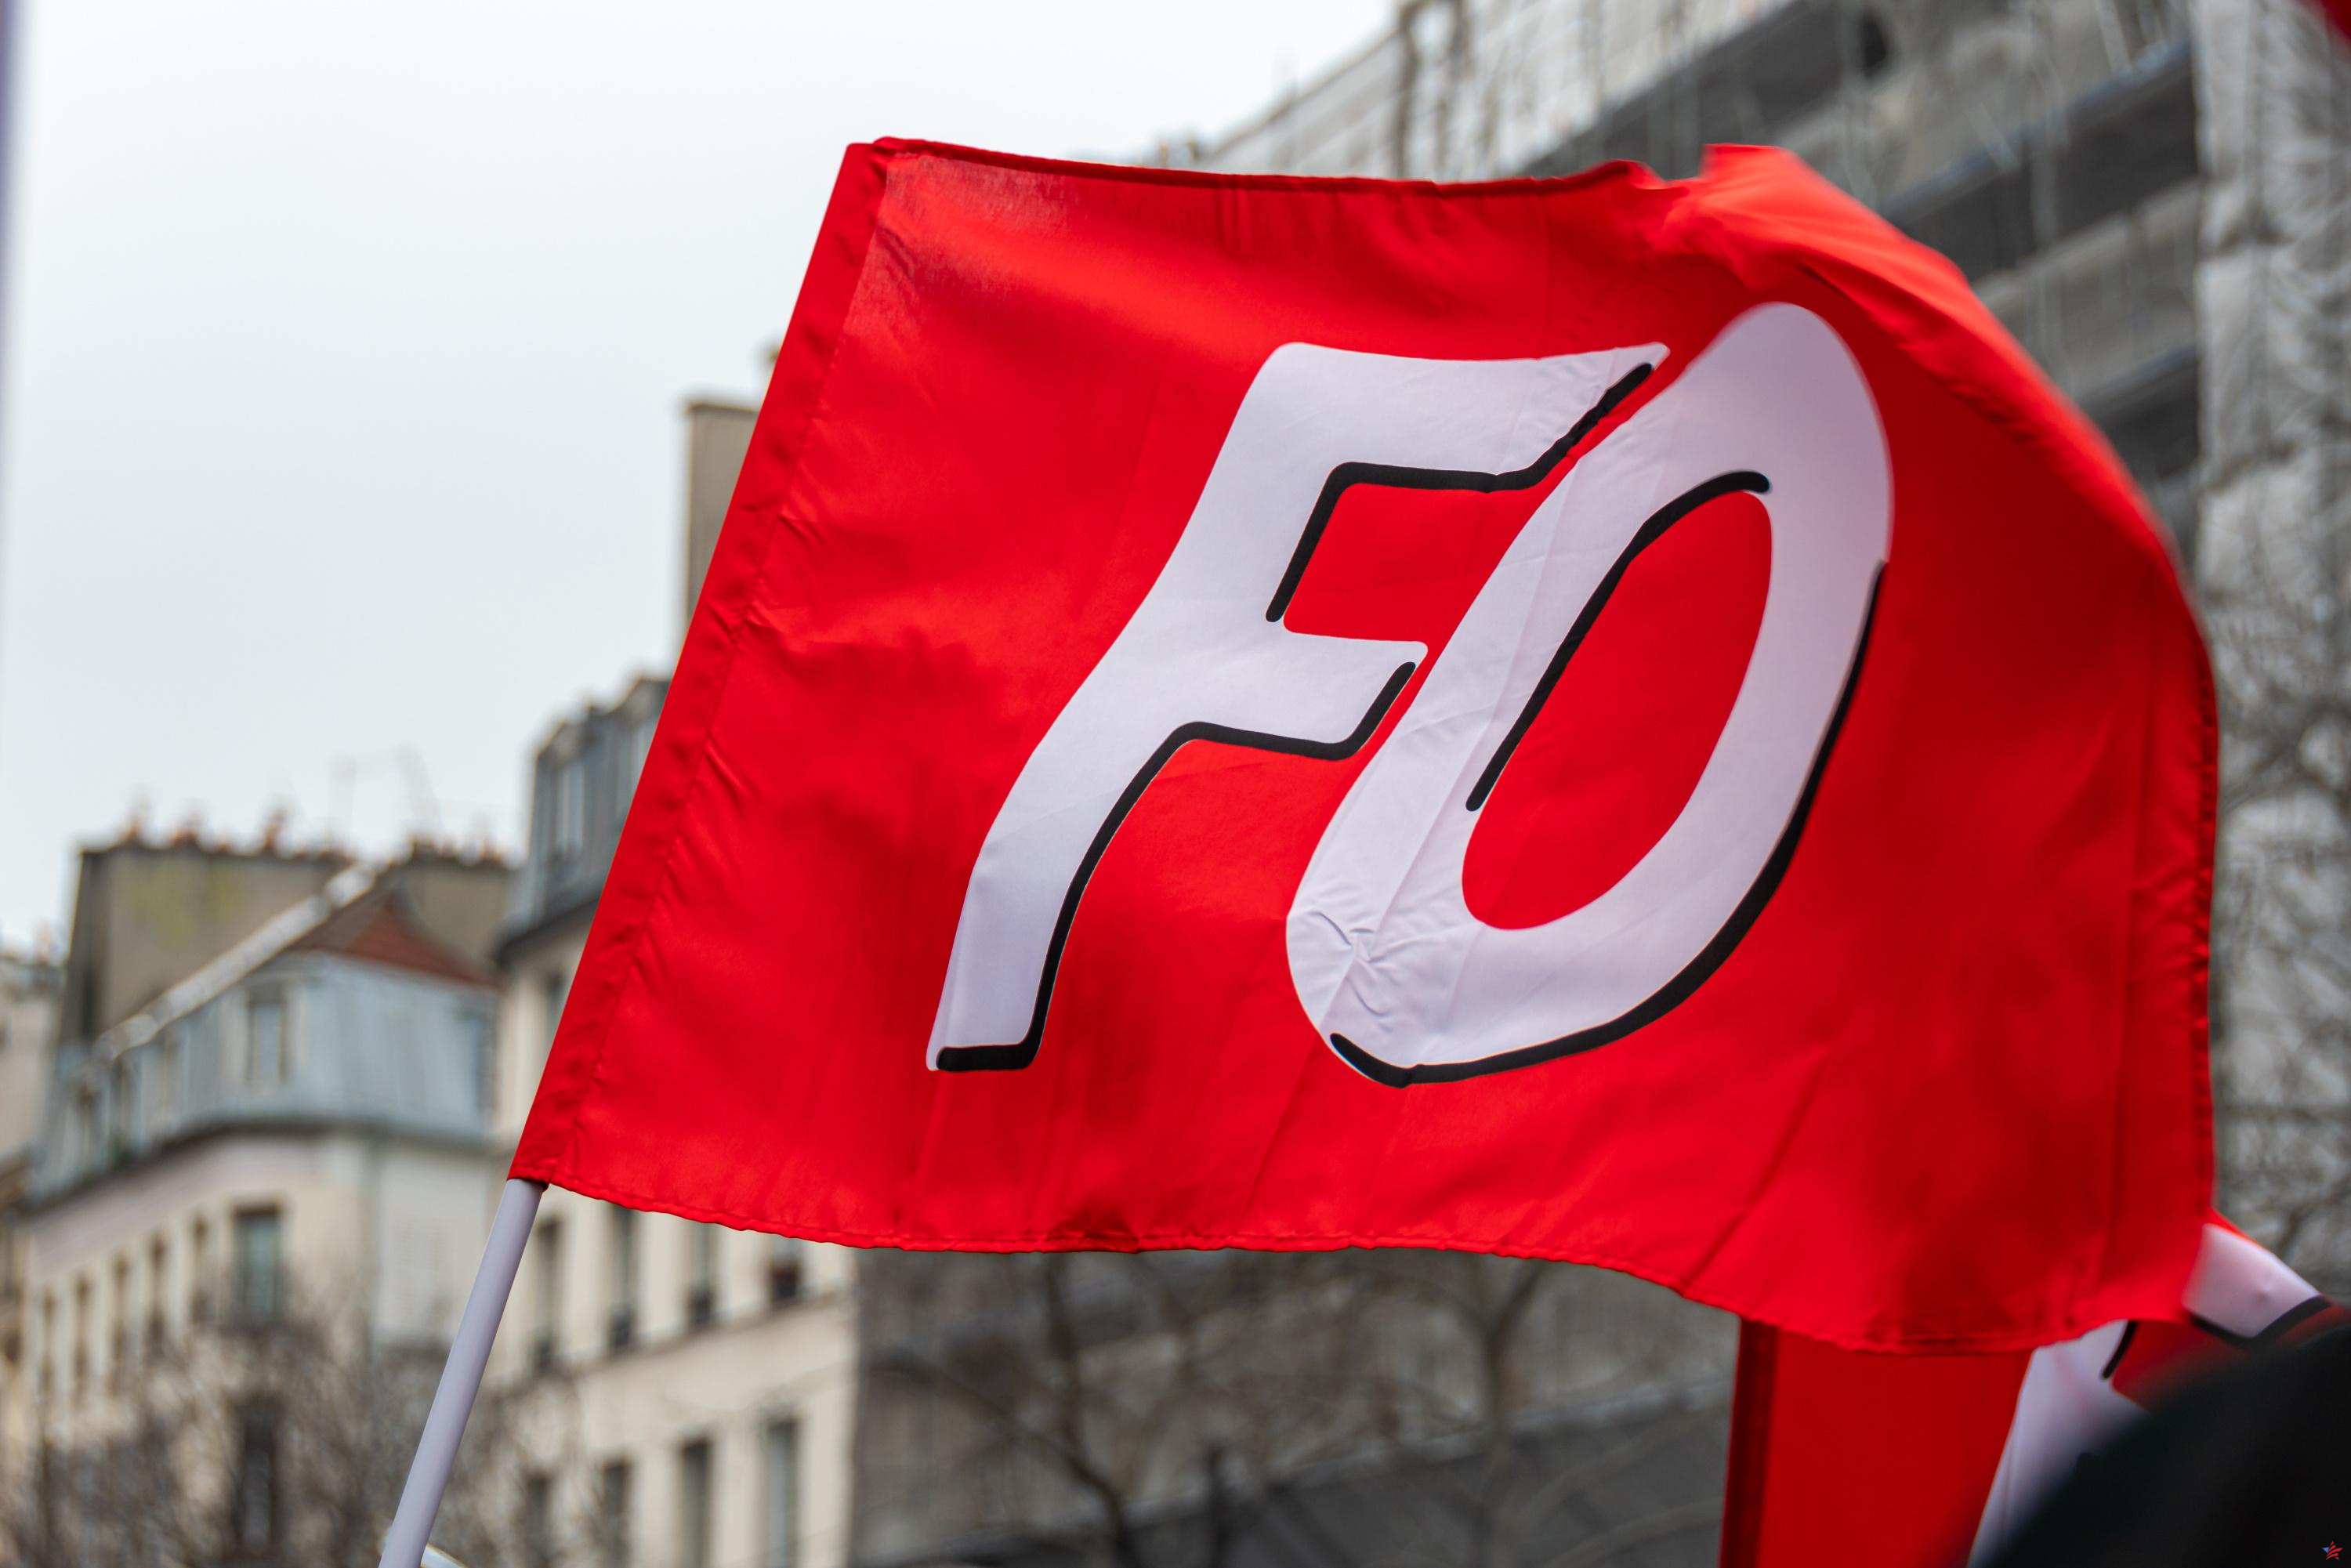 Force Ouvrière convoca una huelga en la función pública a partir del 19 de marzo